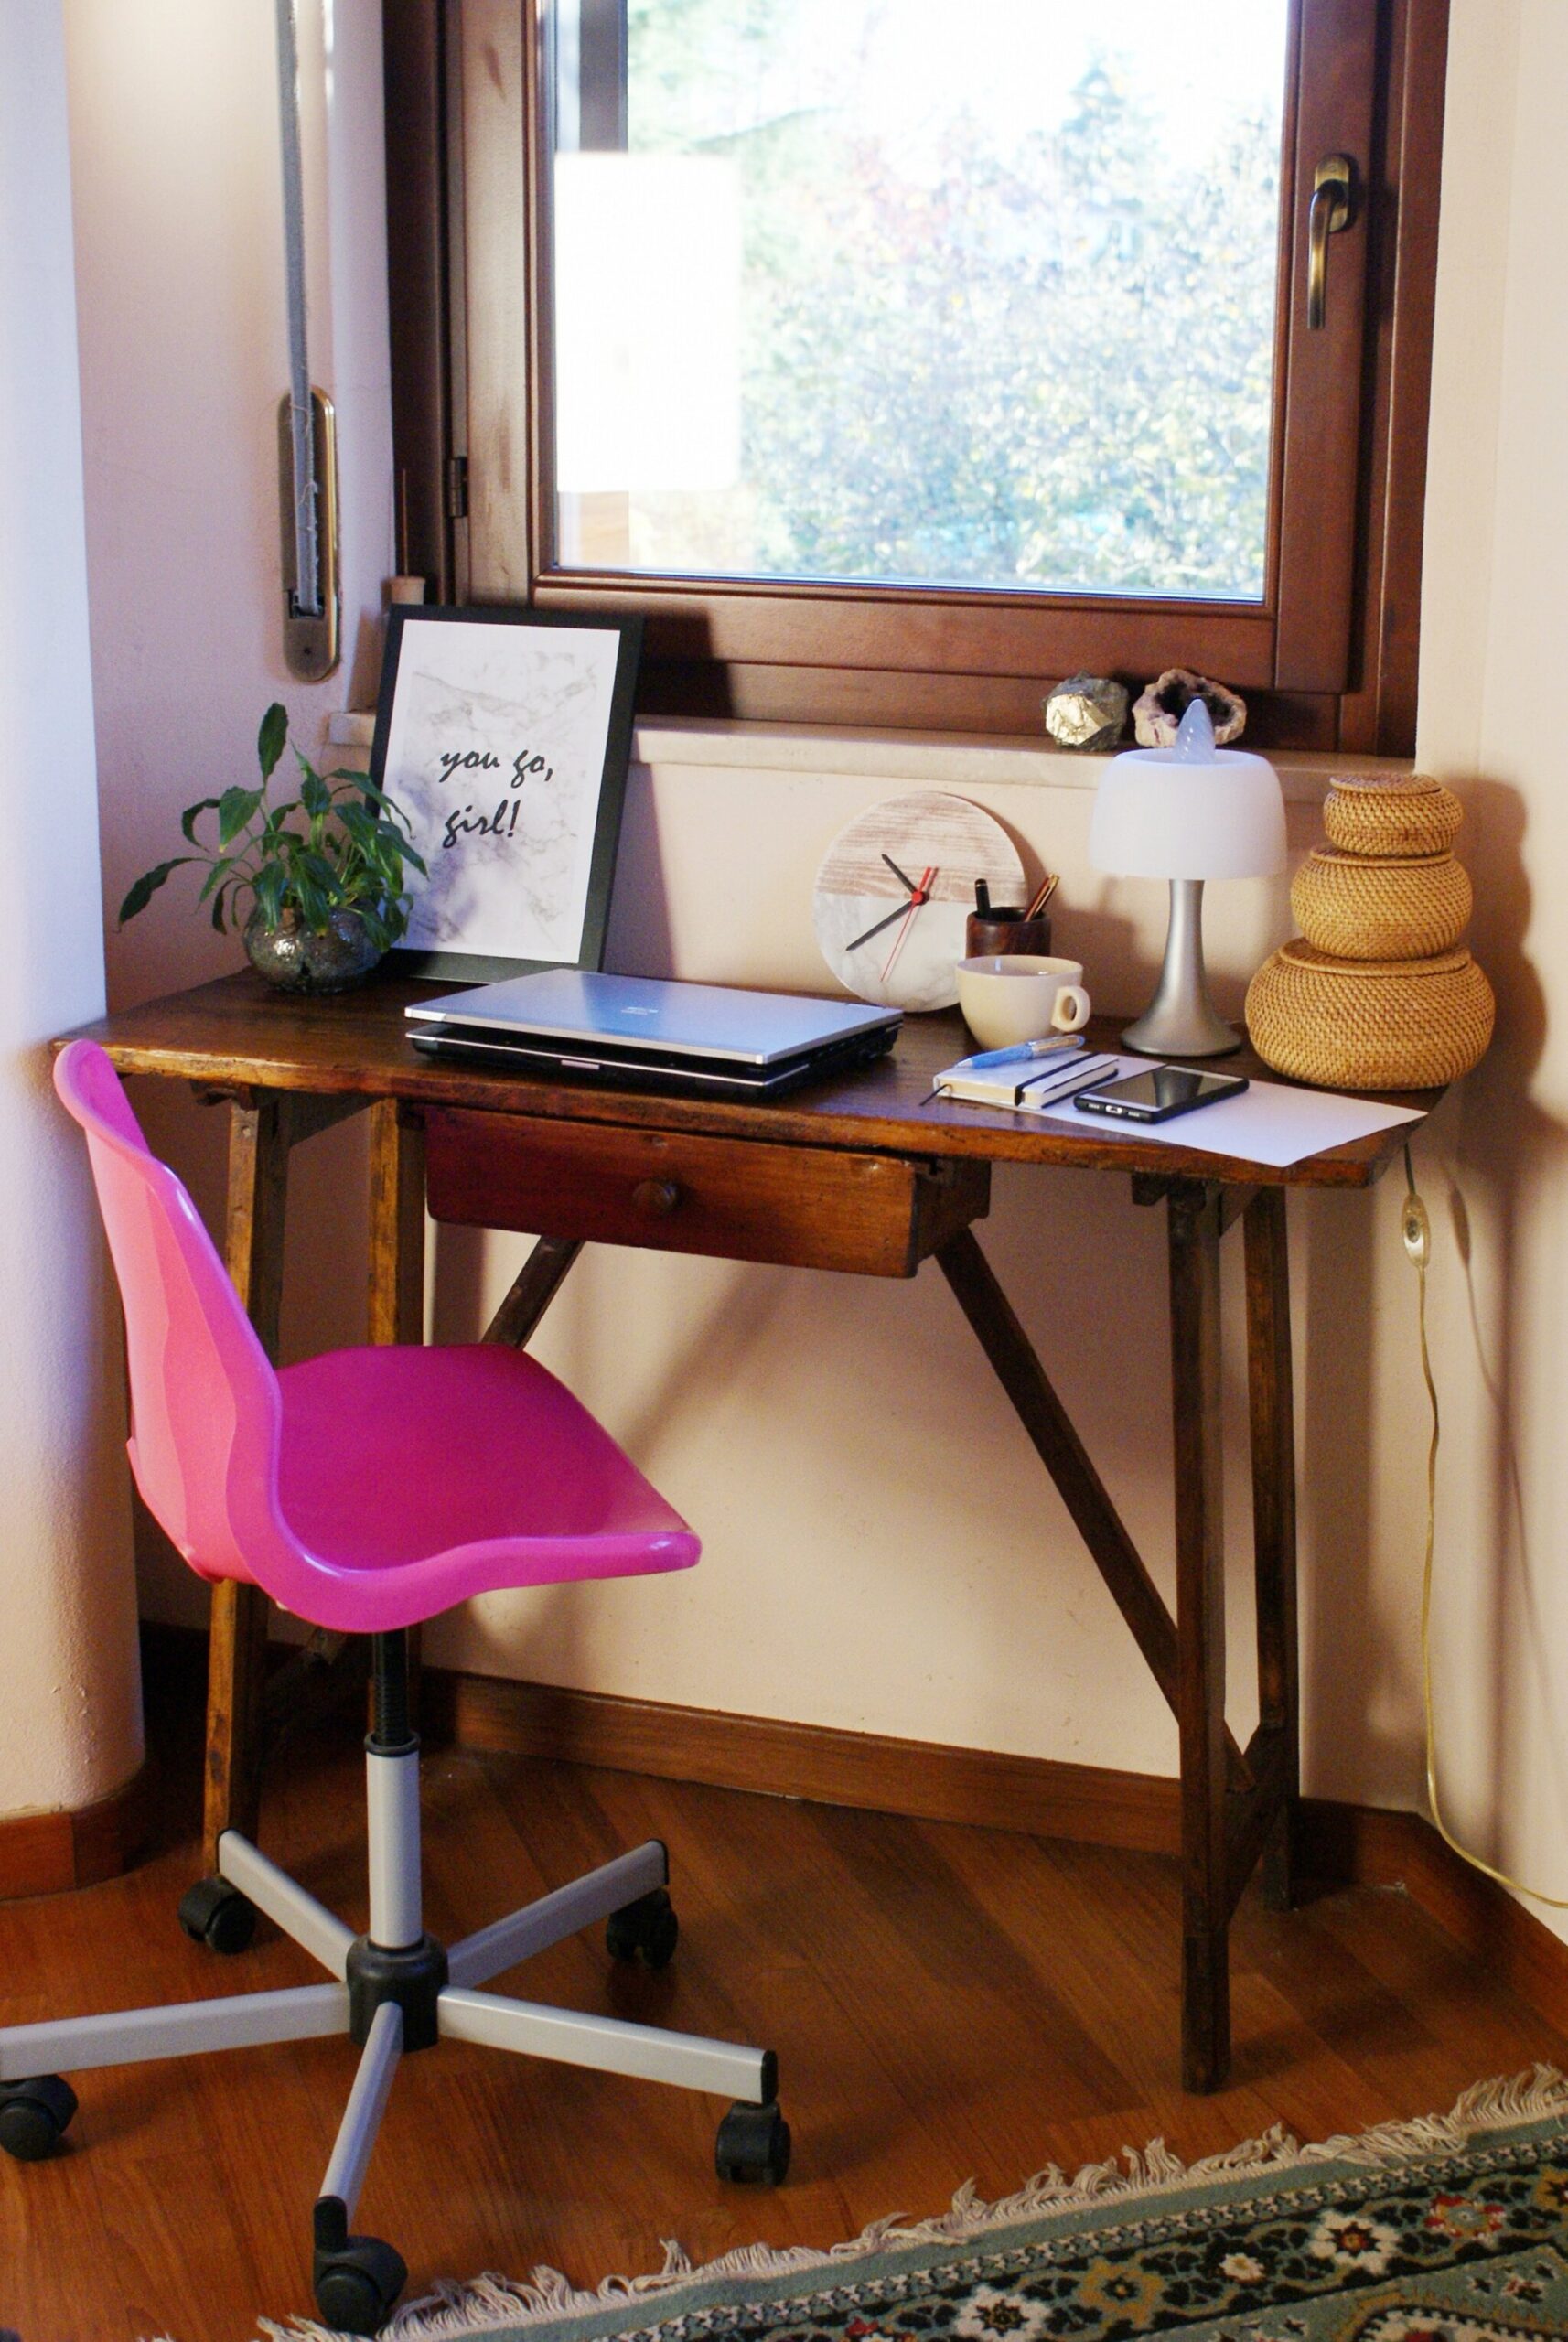 how to create small workspace home tiny office tips come creare spazio lavoro casa piccolo francinesplaceblog 1.JPG